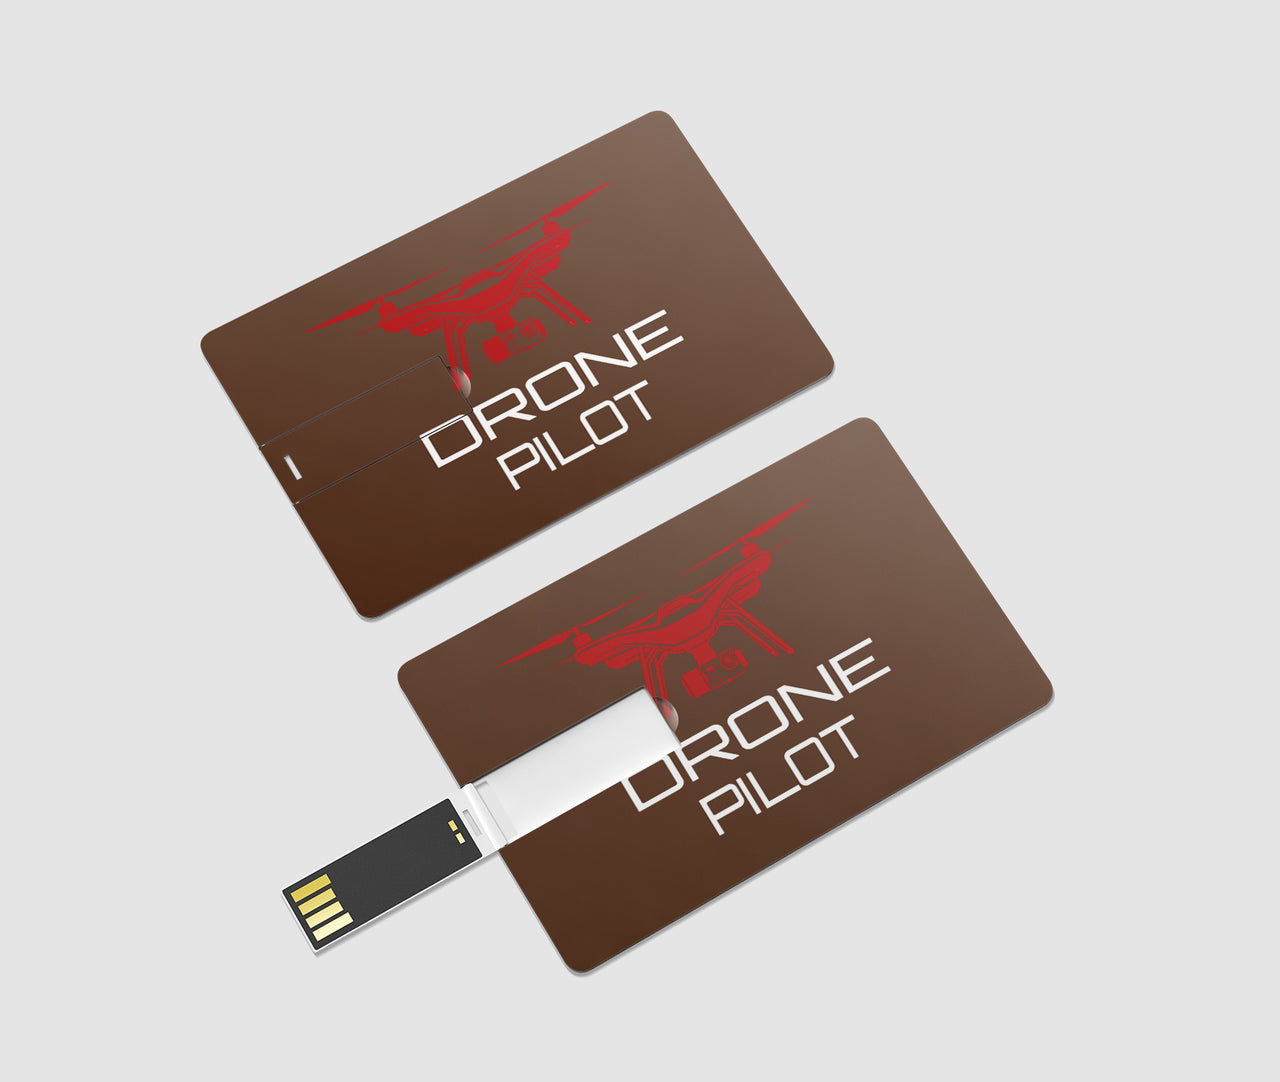 Drone Pilot Designed USB Cards